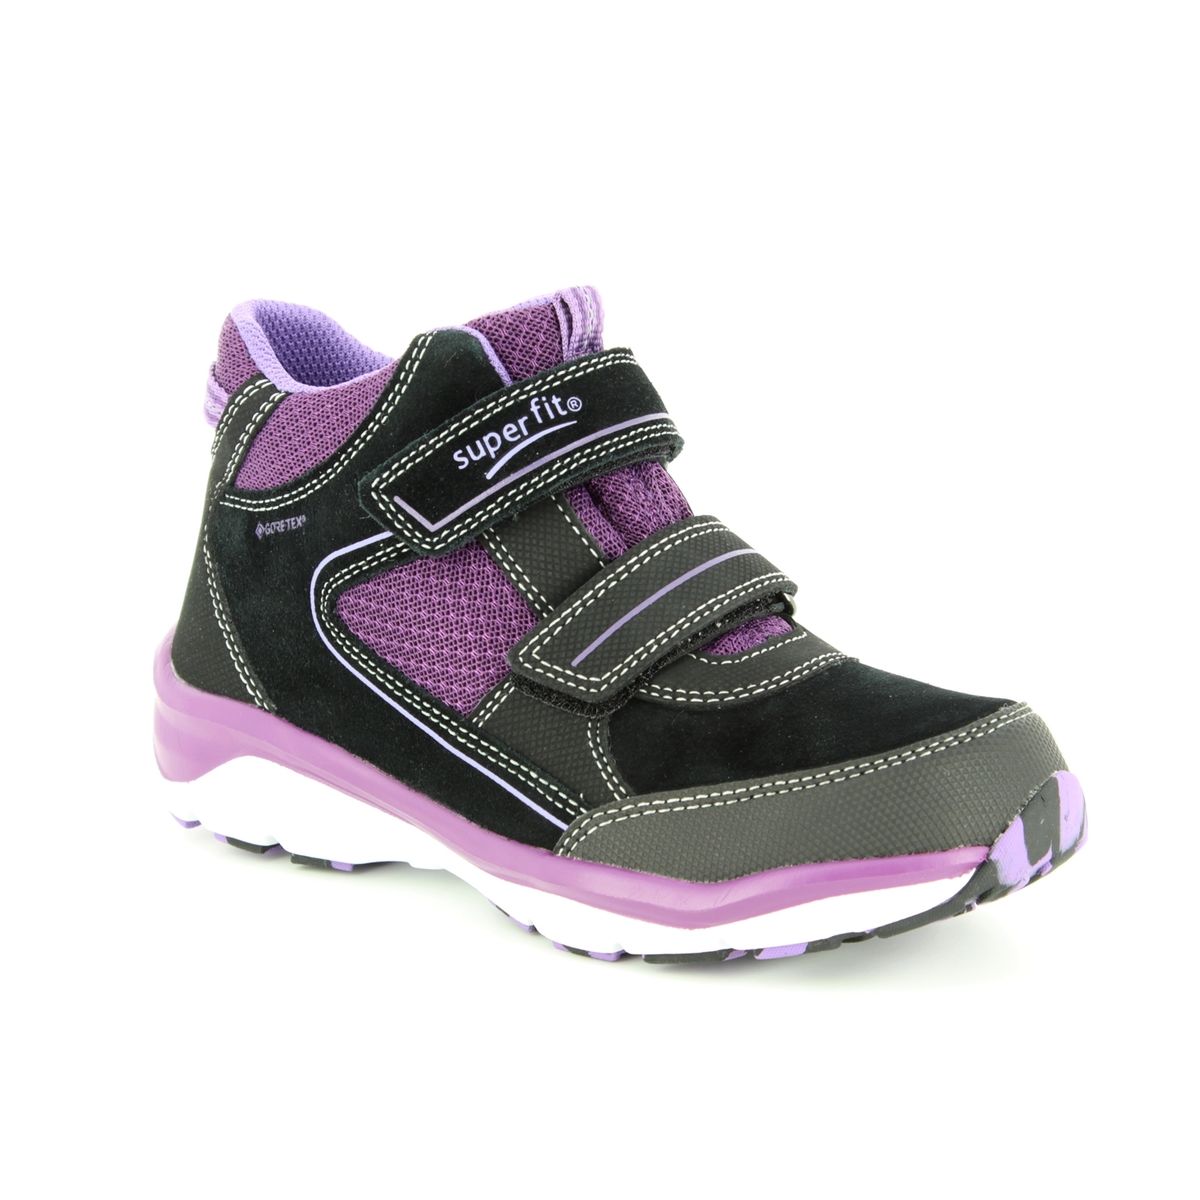 Superfit Sport5 Gtx Girl 09239-02 Black - purple boots